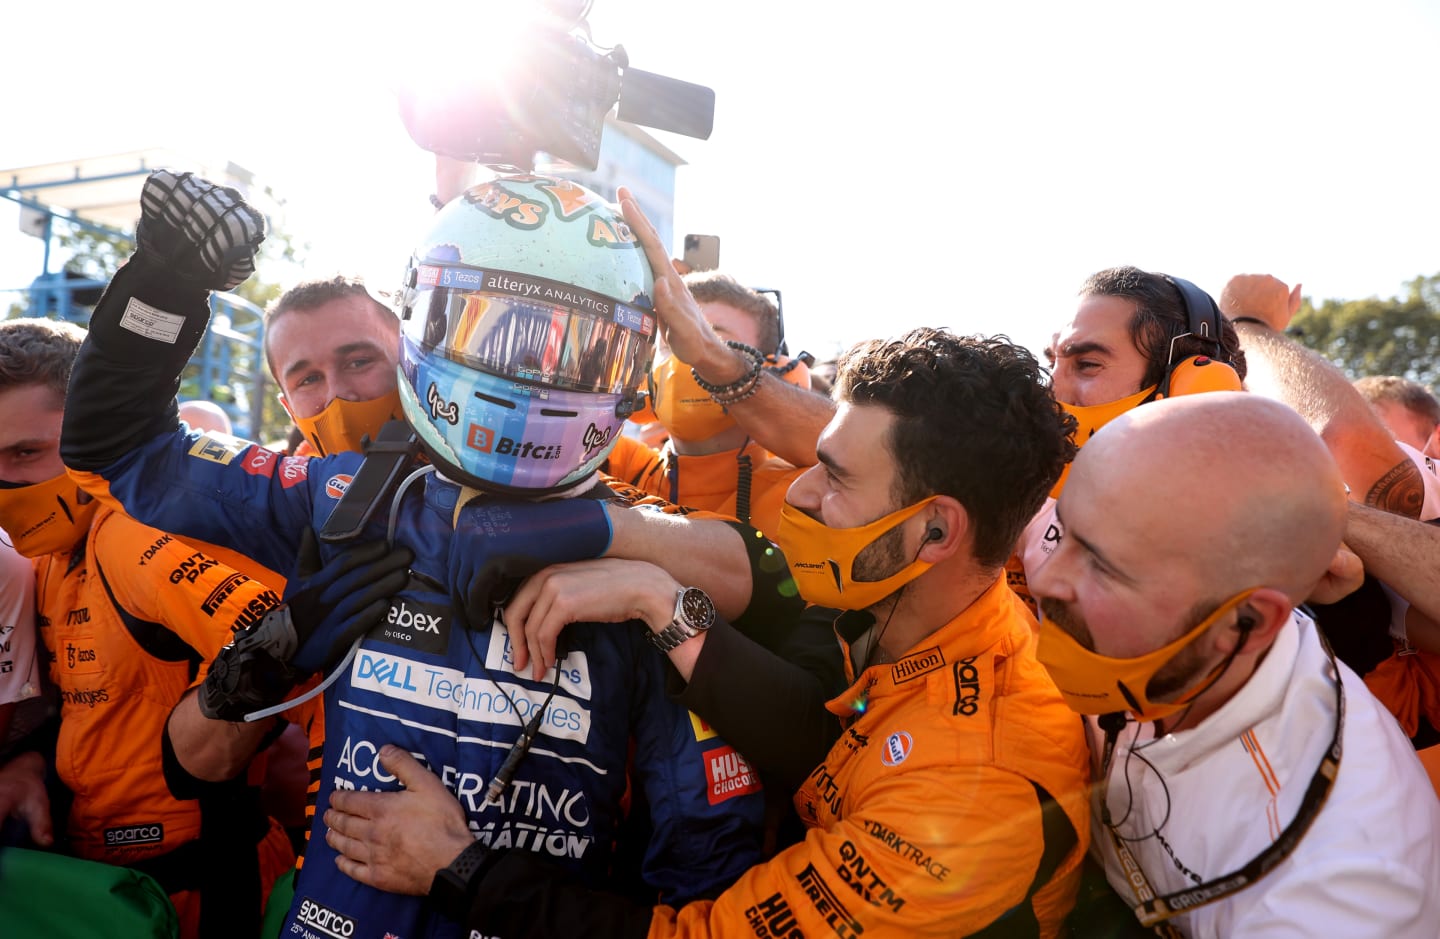 MONZA, ITALY - SEPTEMBER 12: Race winner Daniel Ricciardo of Australia driving the (3) McLaren F1